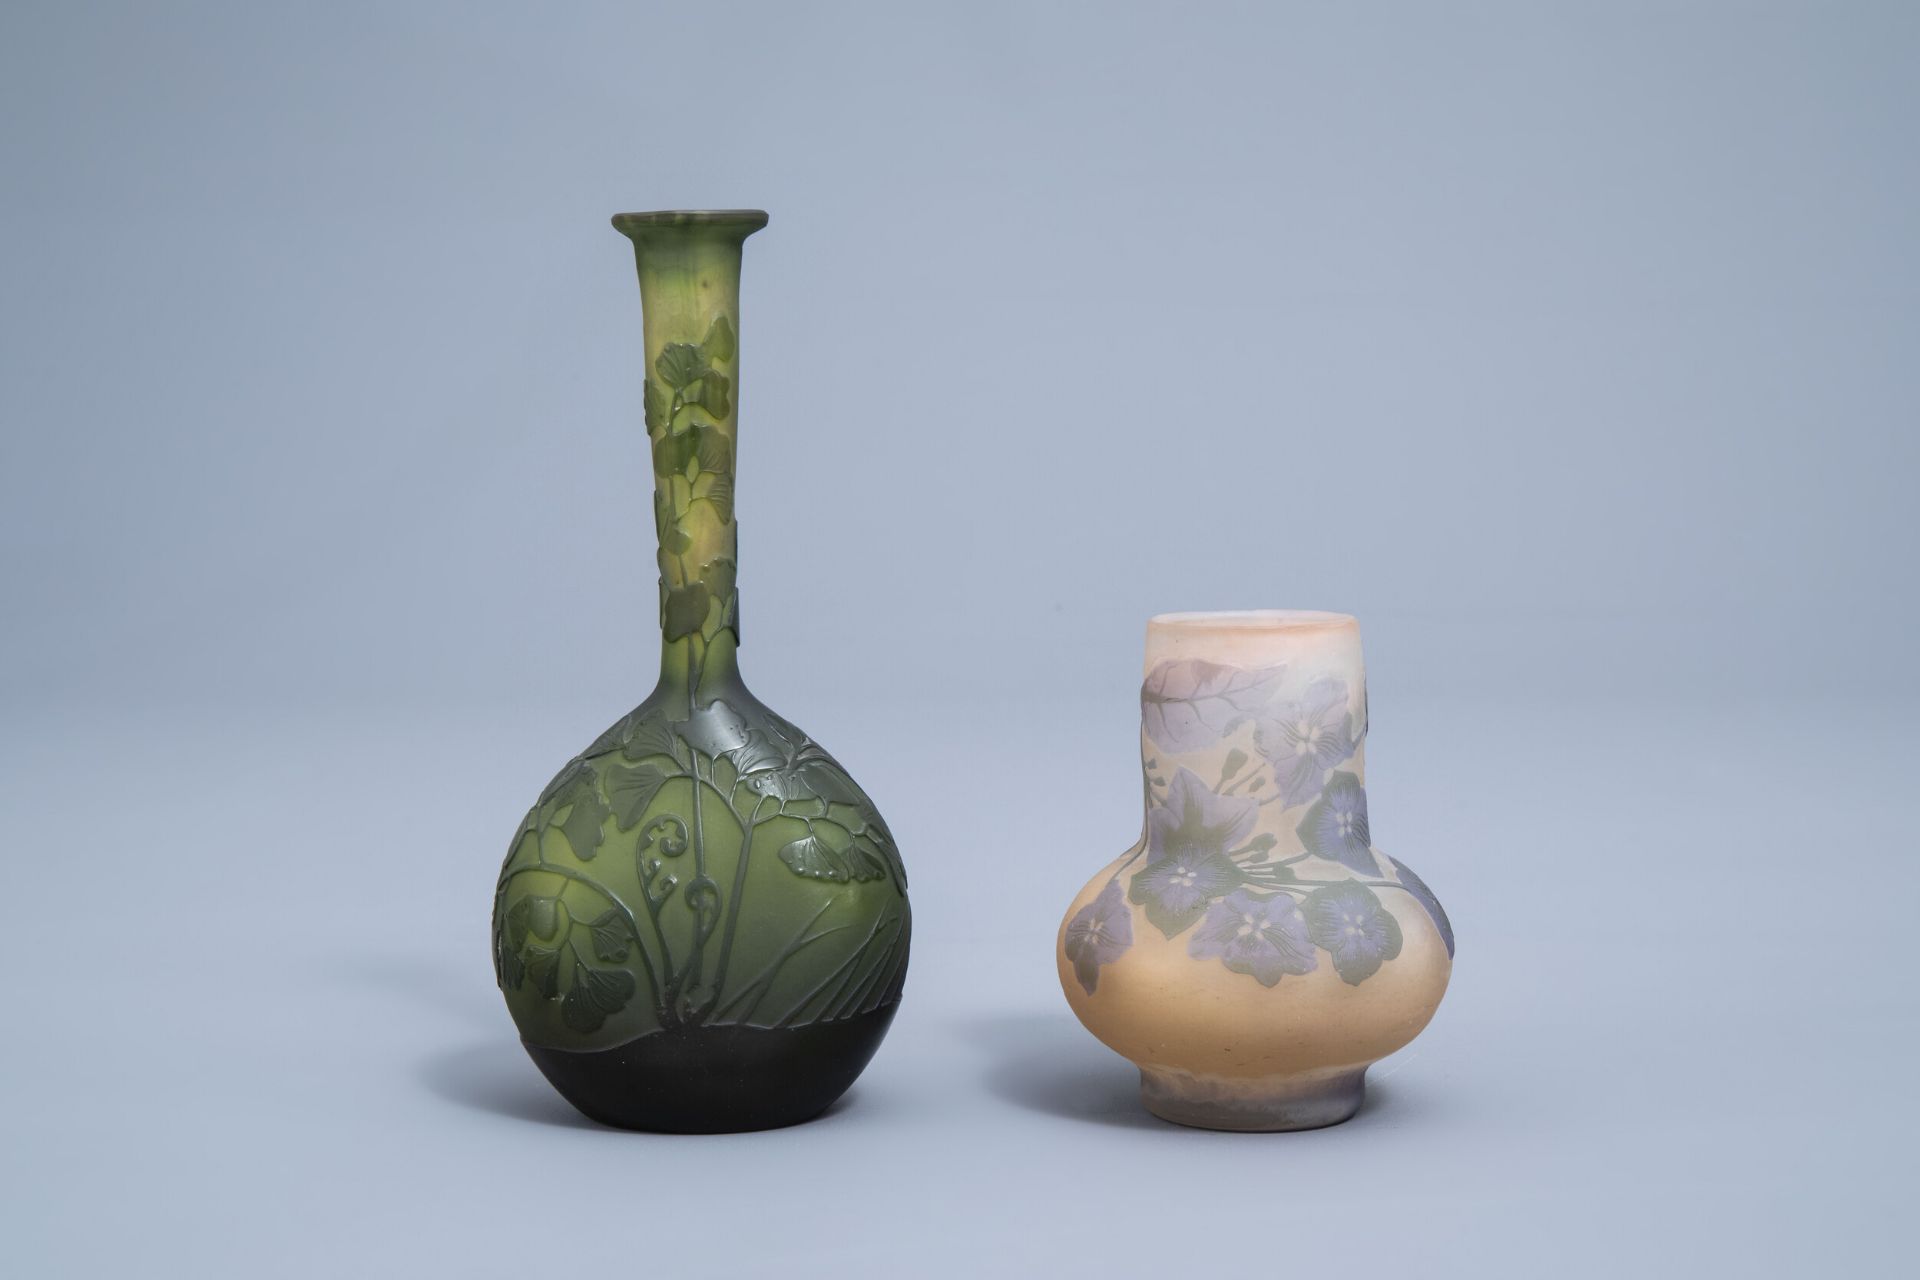 Emile GallŽ (1846-1904): Two cameo glass Art Nouveau vases with floral design, 20th C.